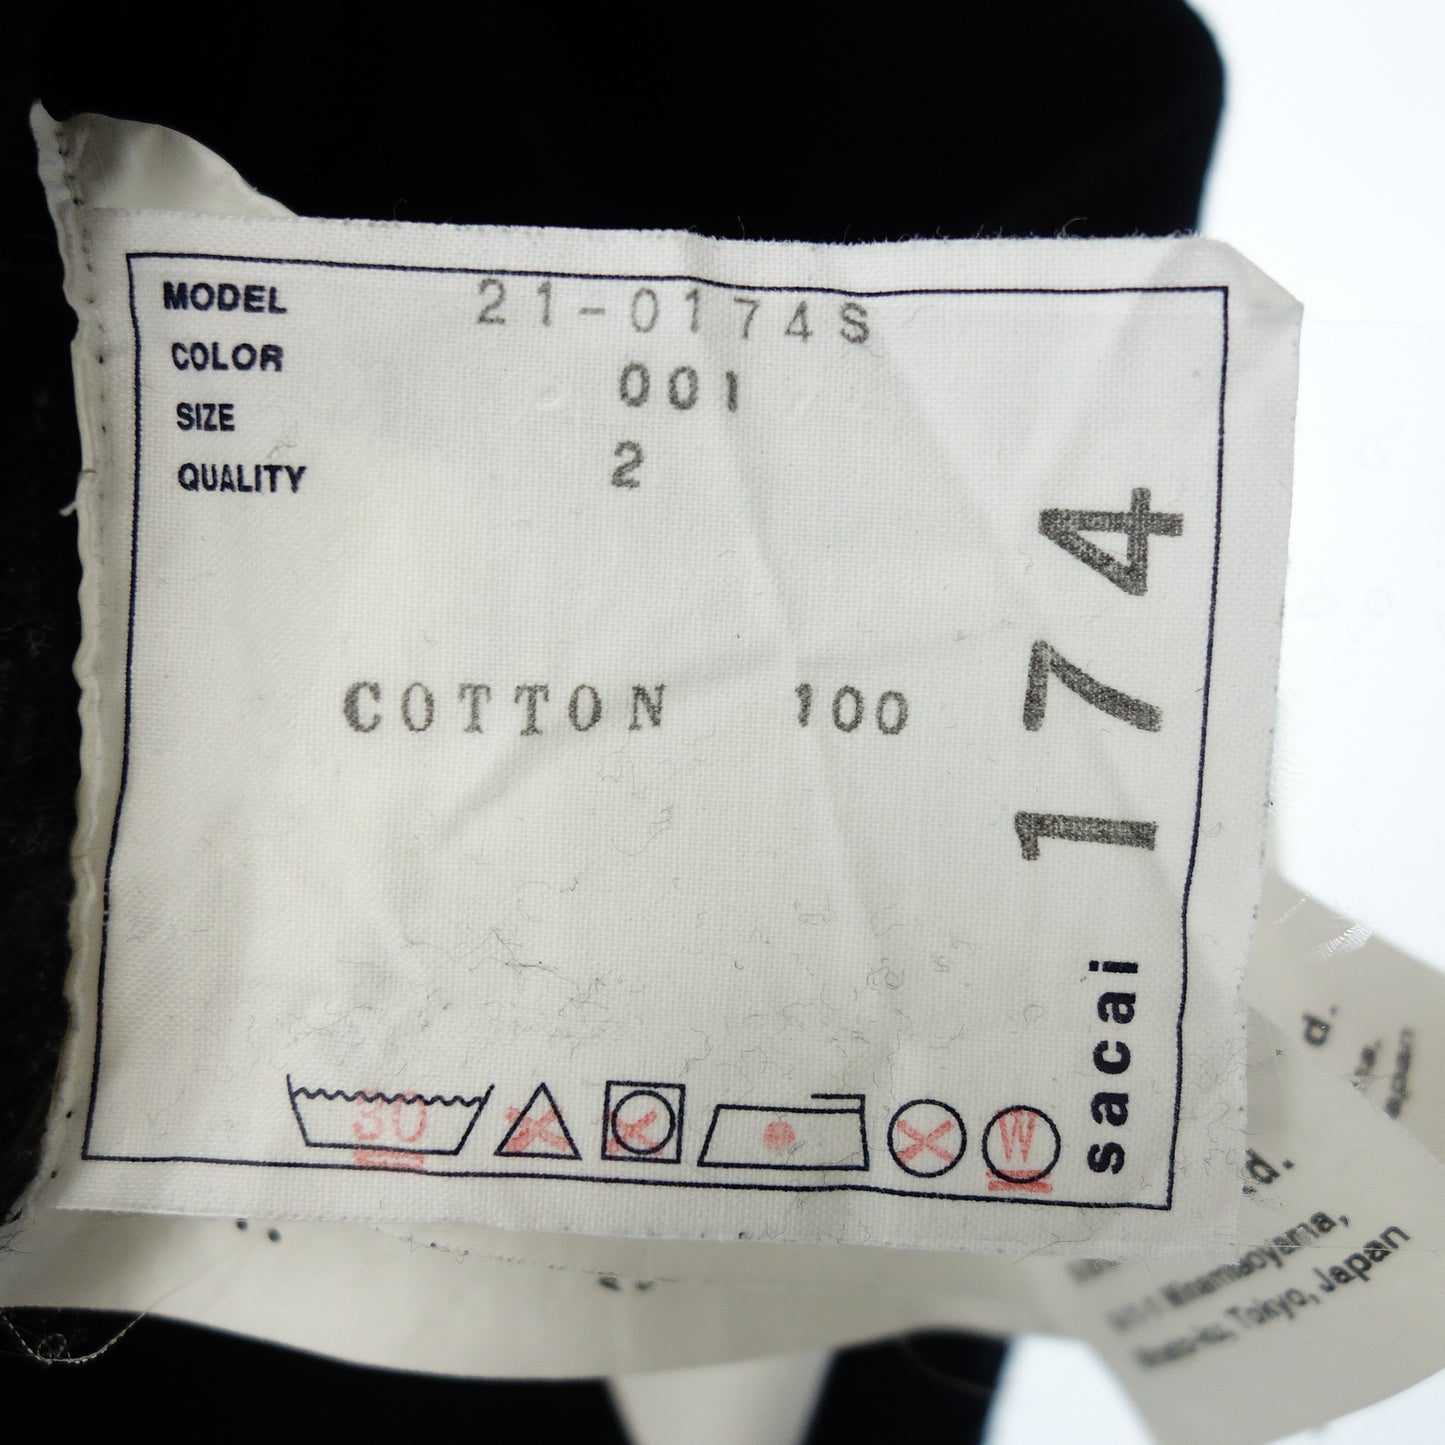 Used ◆ Sacai Tops Print Sweatshirt Hank Willis Sweatshirt 21-0174S Size 2 Men's Black Sacai Hank Willis Thomas Archive Mix Pullover [AFB42] 